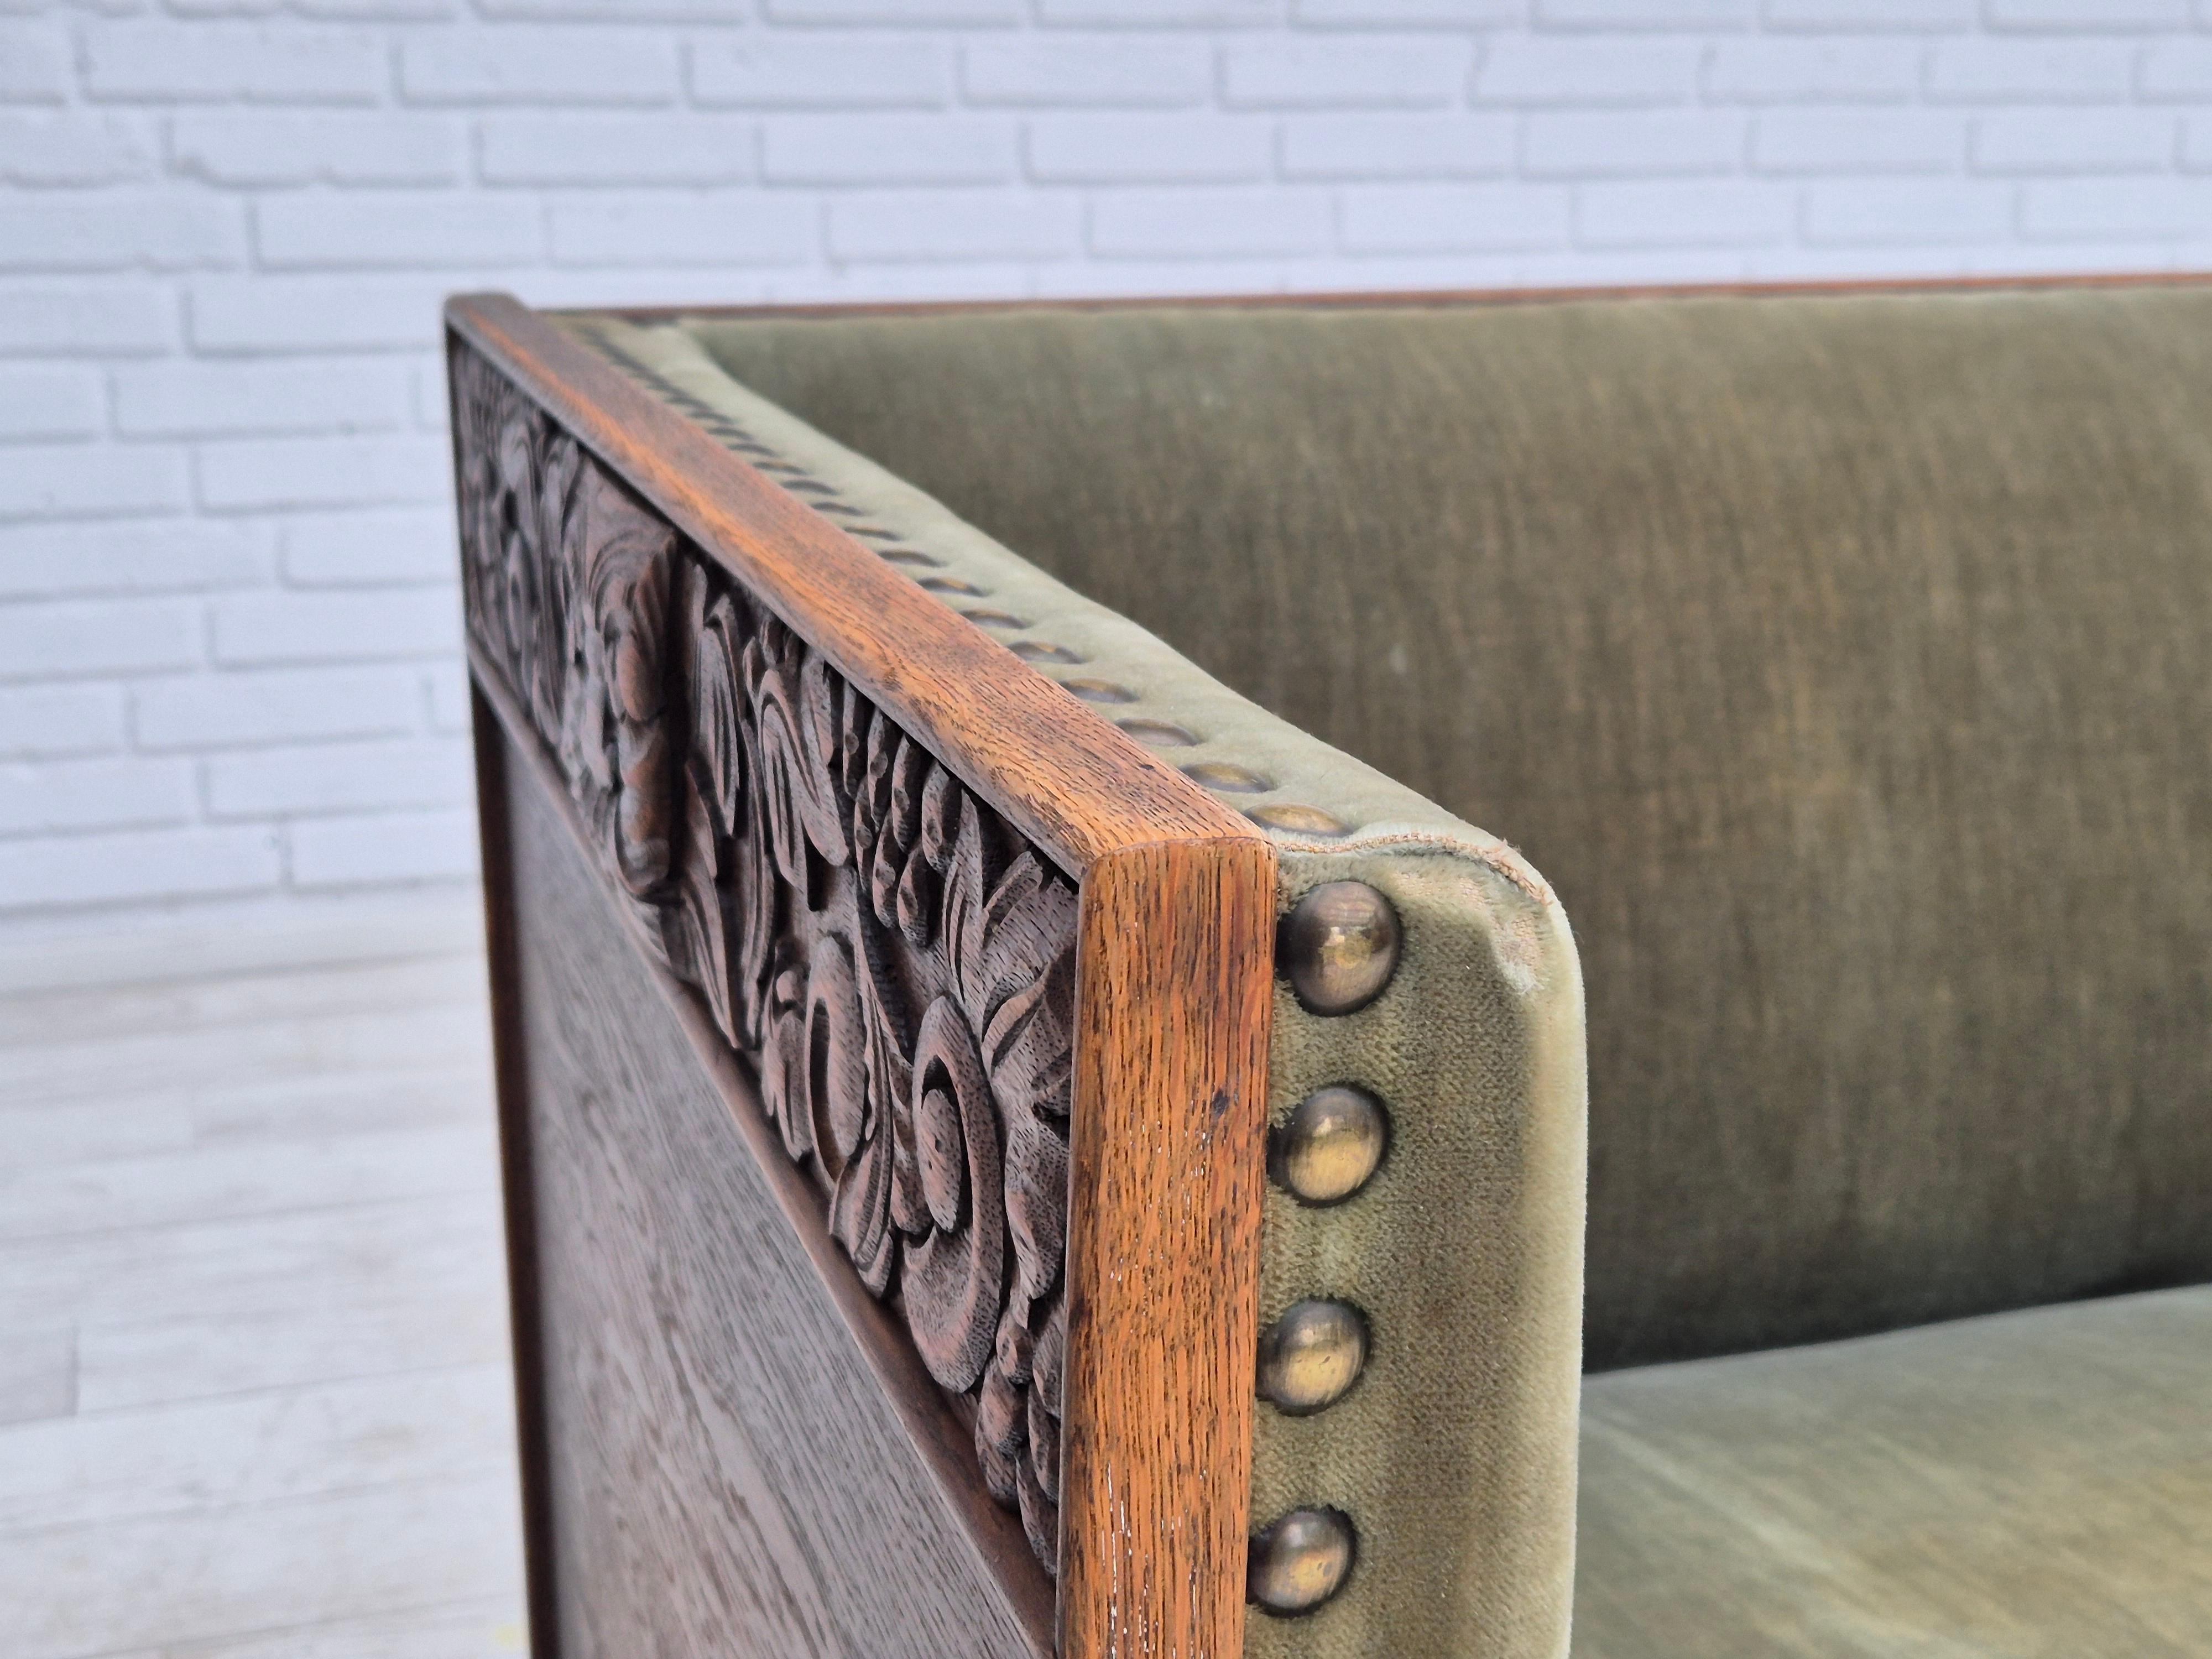 1950s, Danish 2 seater sofa, original condition, furniture velour, oak wood. 2